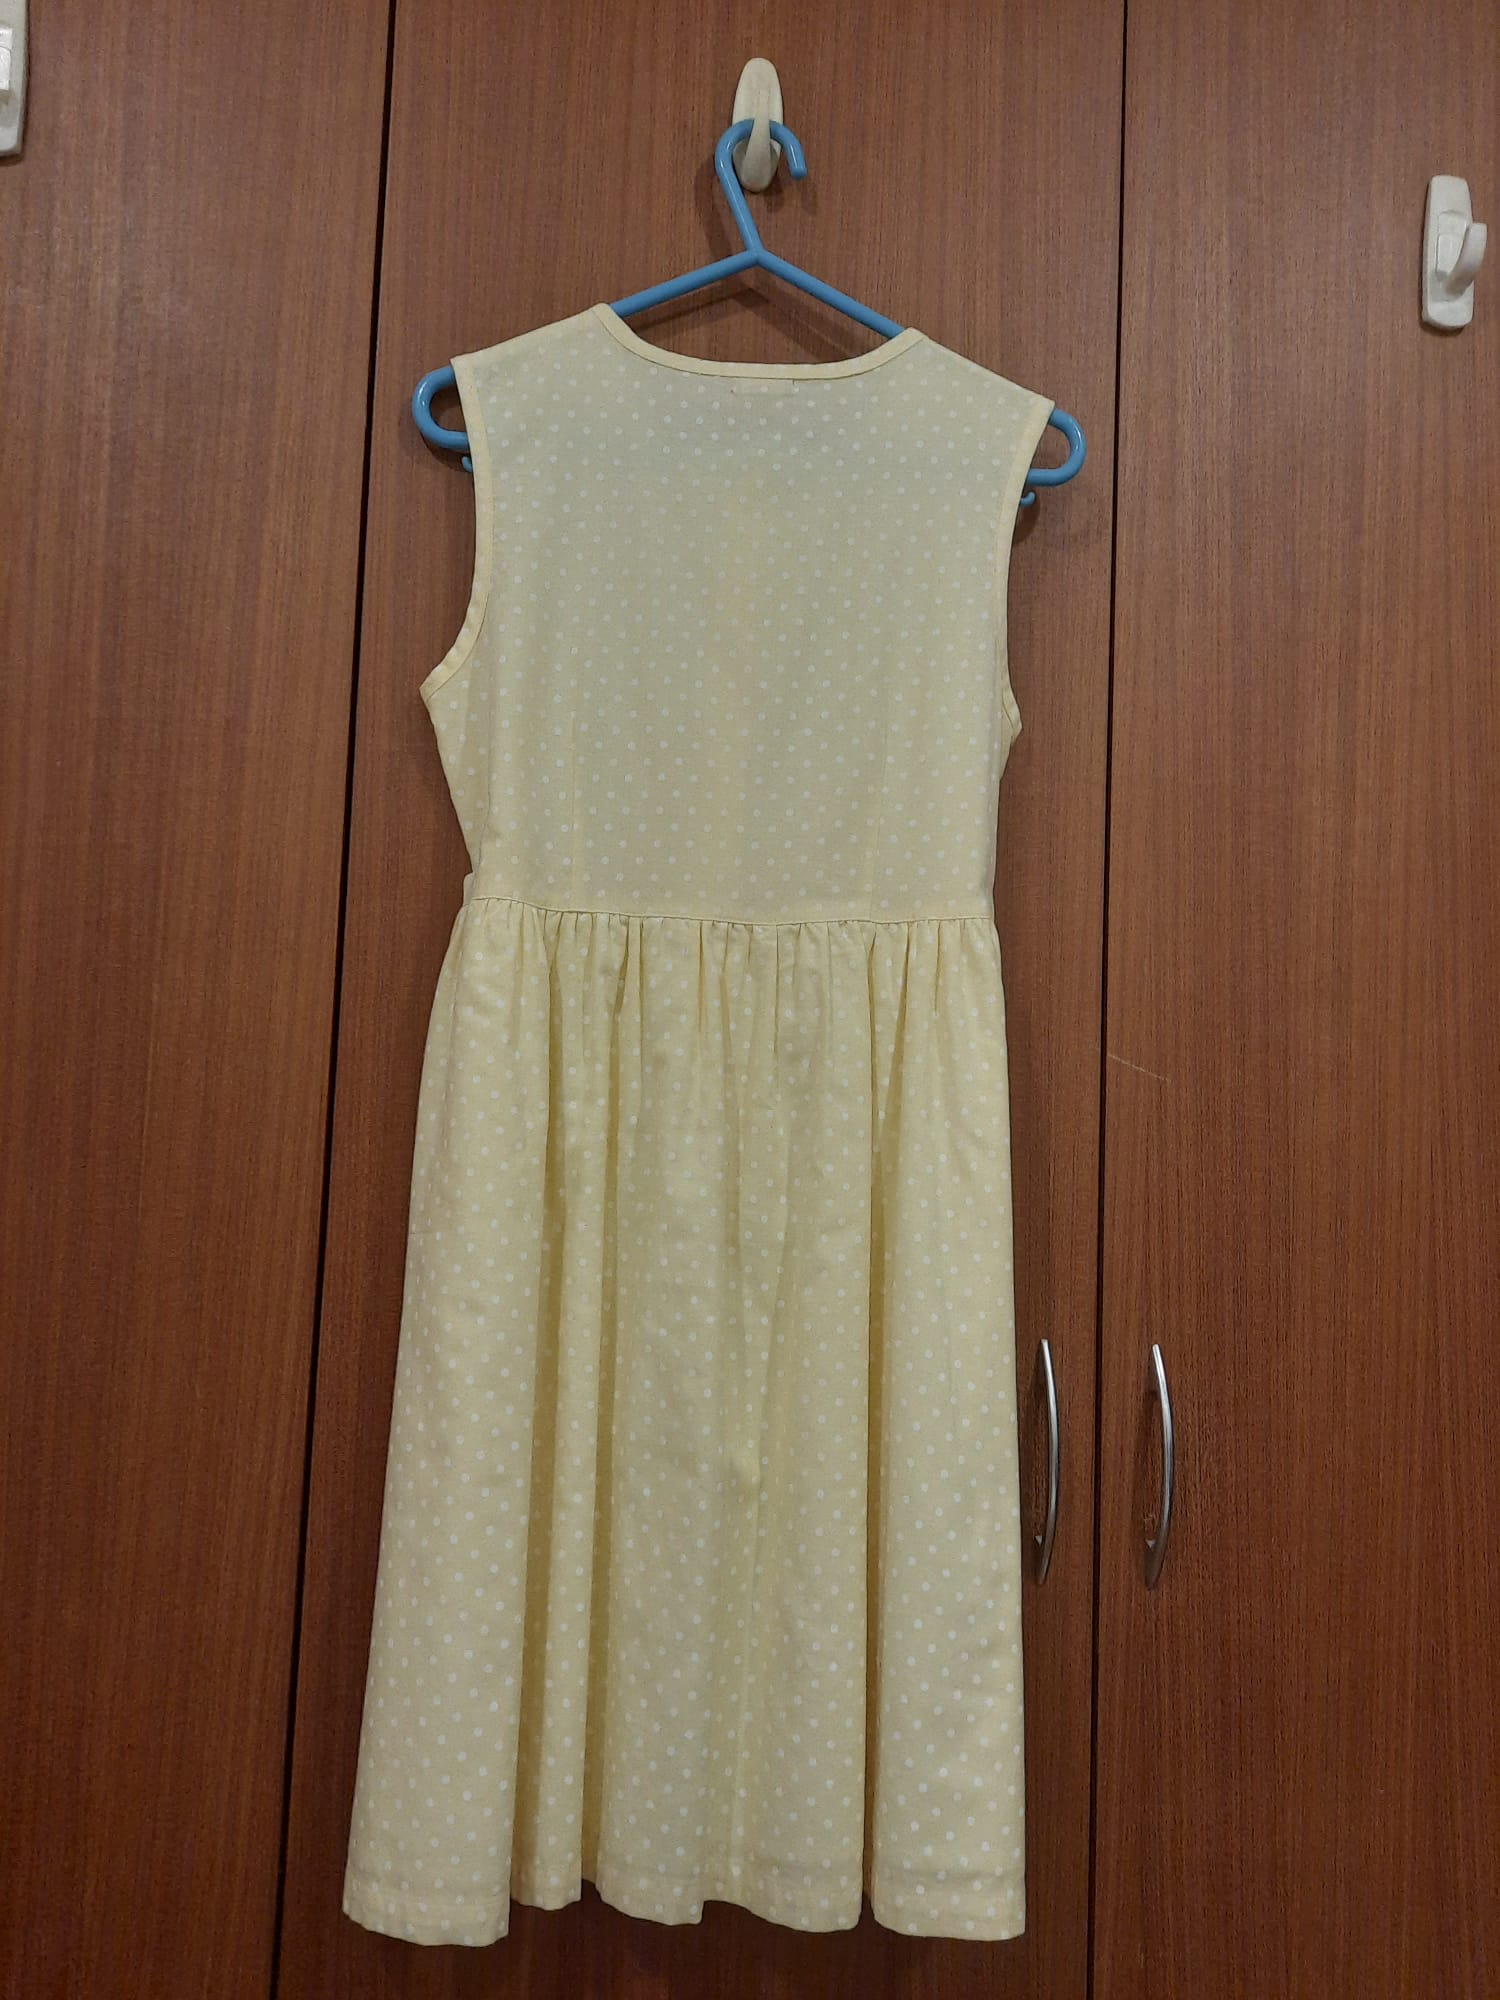 Little Renown yellow dress 2.jpeg